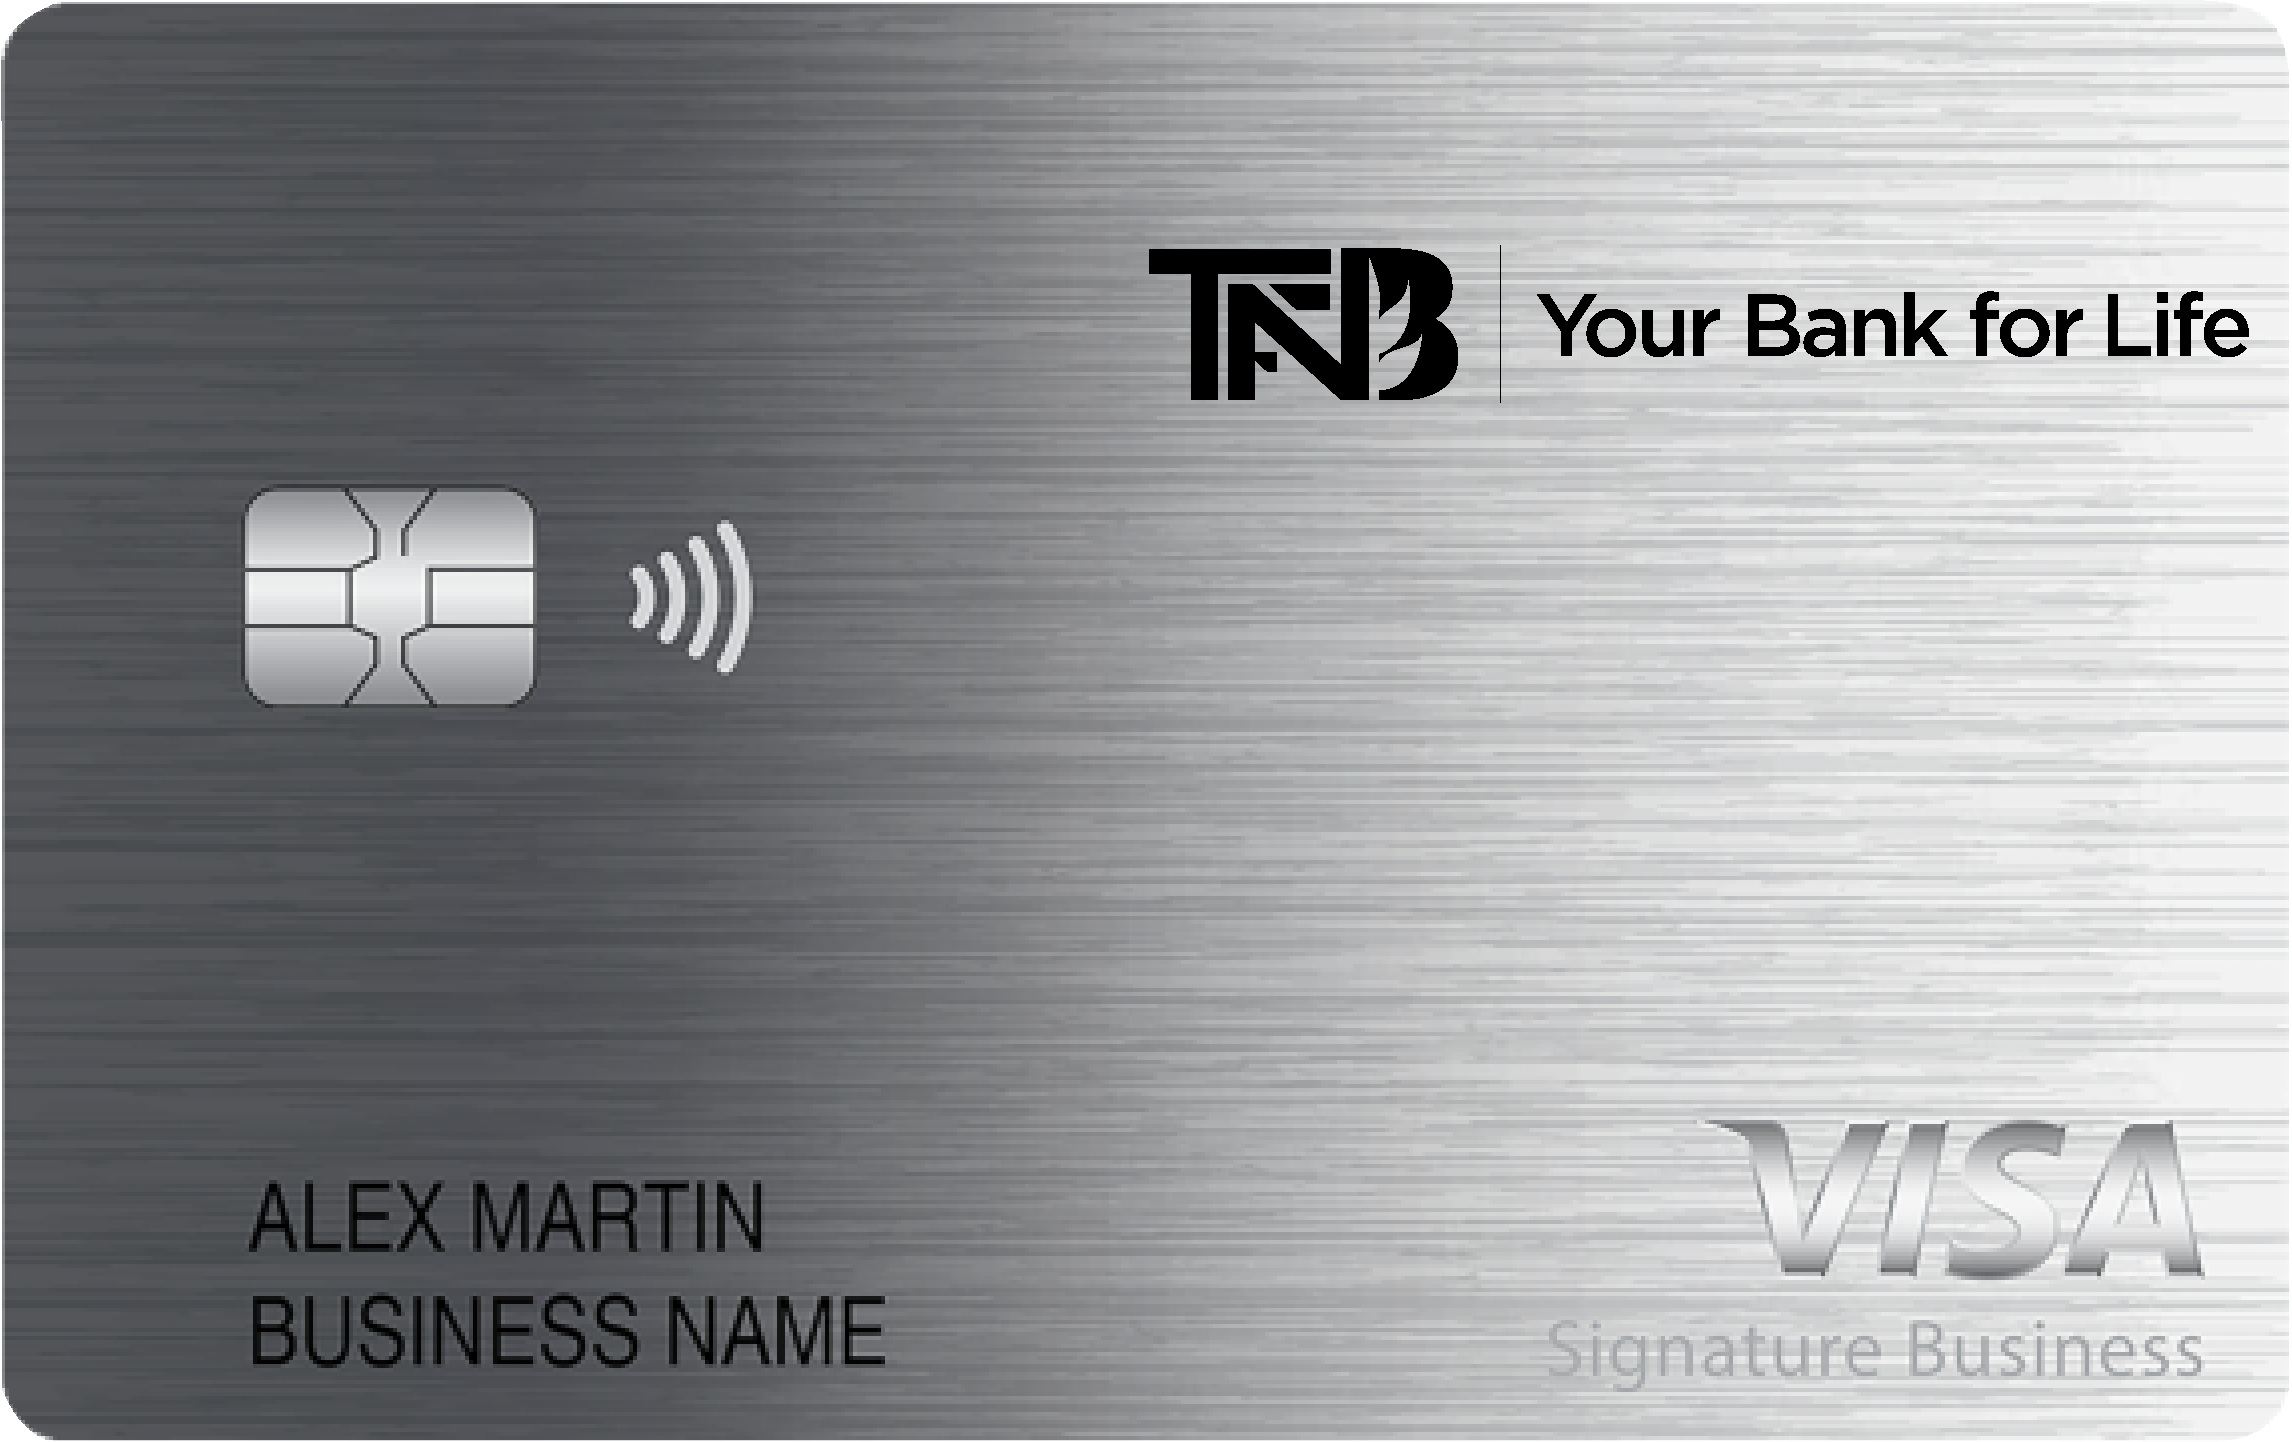 TFNB Your Bank for Life Smart Business Rewards Card